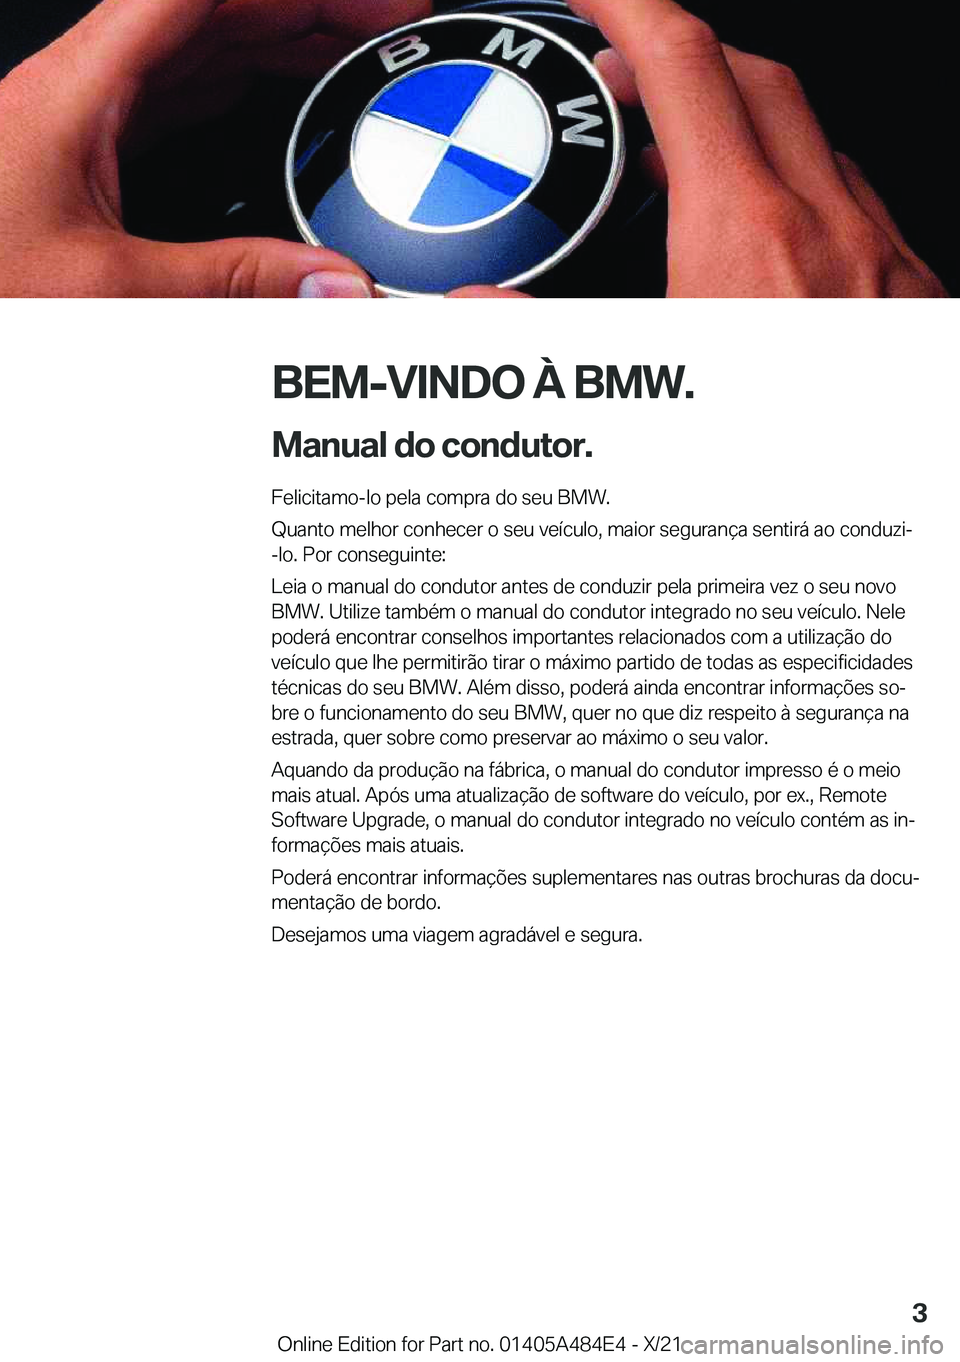 BMW 7 SERIES 2022  Manual do condutor (in Portuguese) �B�E�M�-�V�I�N�D�O��À��B�M�W�.
�M�a�n�u�a�l��d�o��c�o�n�d�u�t�o�r�. �F�e�l�i�c�i�t�a�m�o�-�l�o��p�e�l�a��c�o�m�p�r�a��d�o��s�e�u��B�M�W�.
�Q�u�a�n�t�o��m�e�l�h�o�r��c�o�n�h�e�c�e�r��o��s